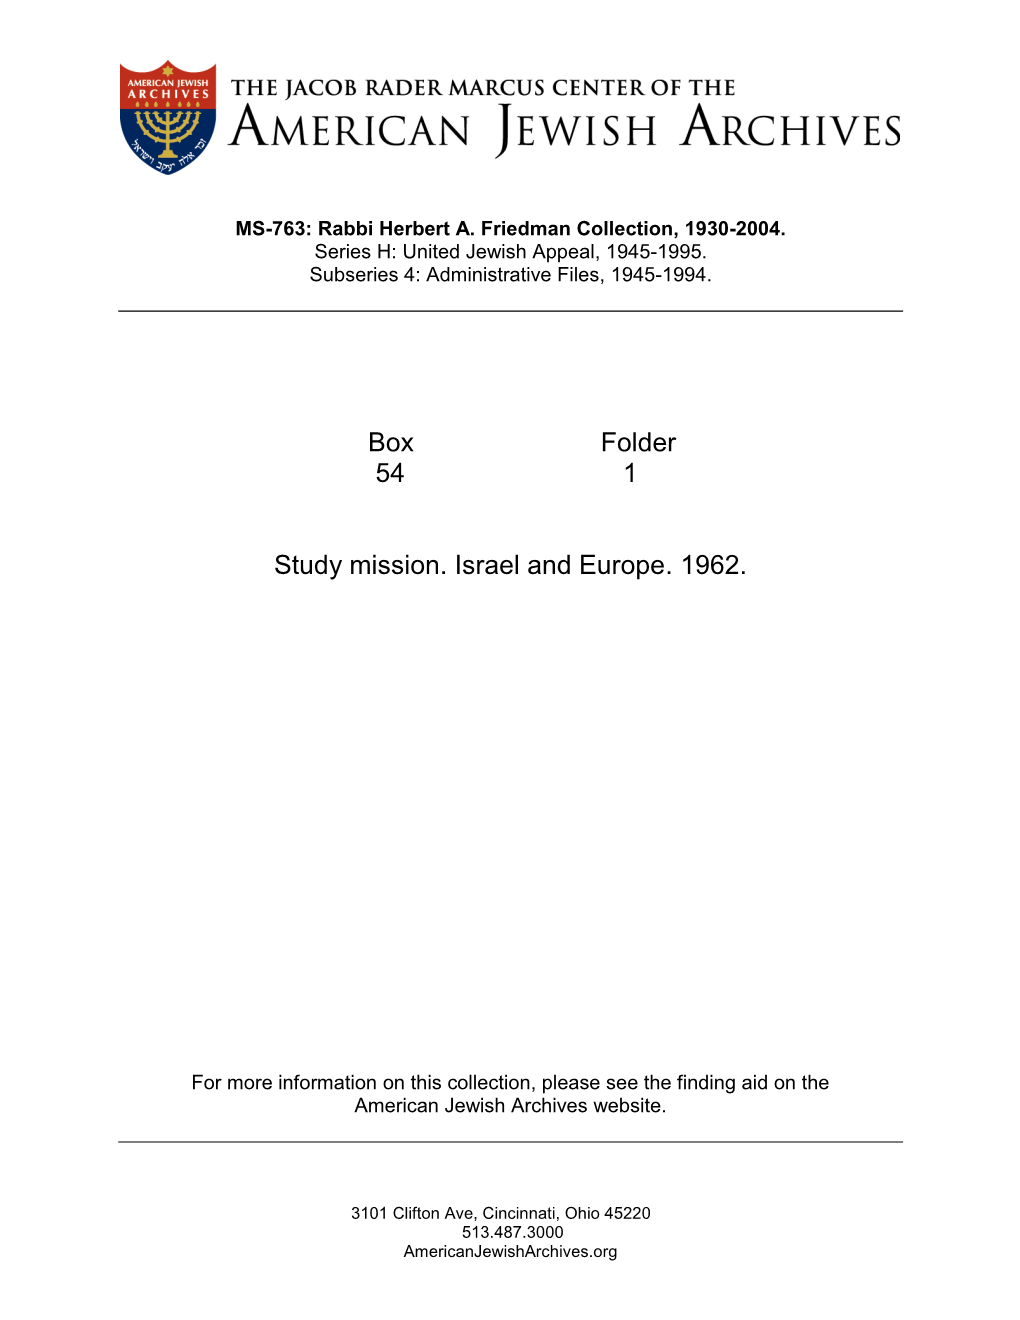 Box Folder 54 1 Study Mission. Israel and Europe. 1962